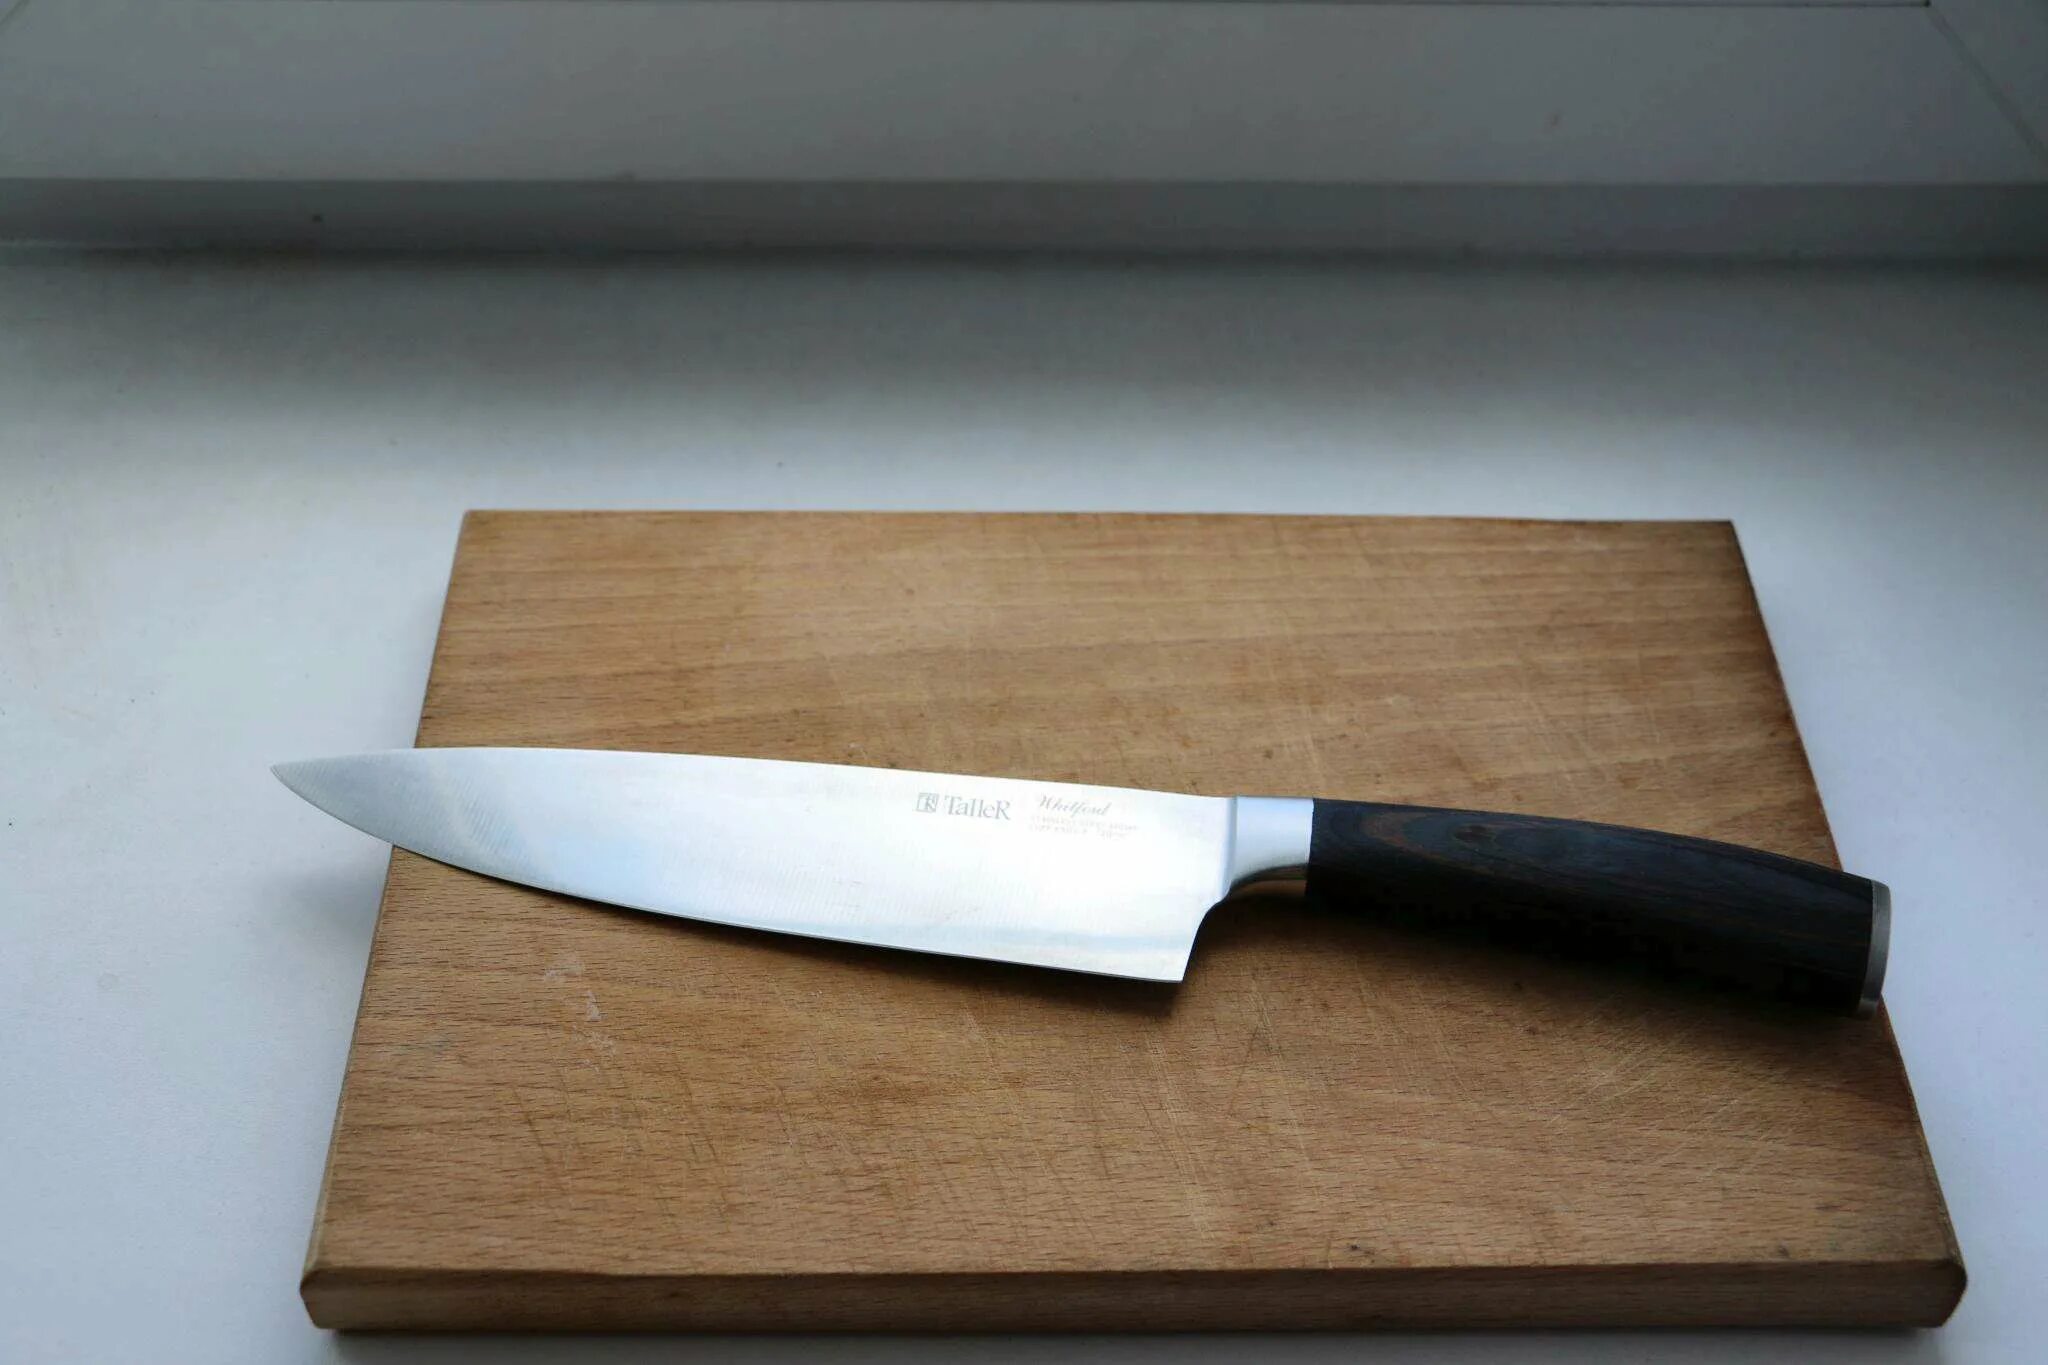 Taller expertise. Кухонный нож Taller tr-22079. Нож кухонный Taller tr-22065. Taller 22301 нож поварской. Нож Taller Whitford.